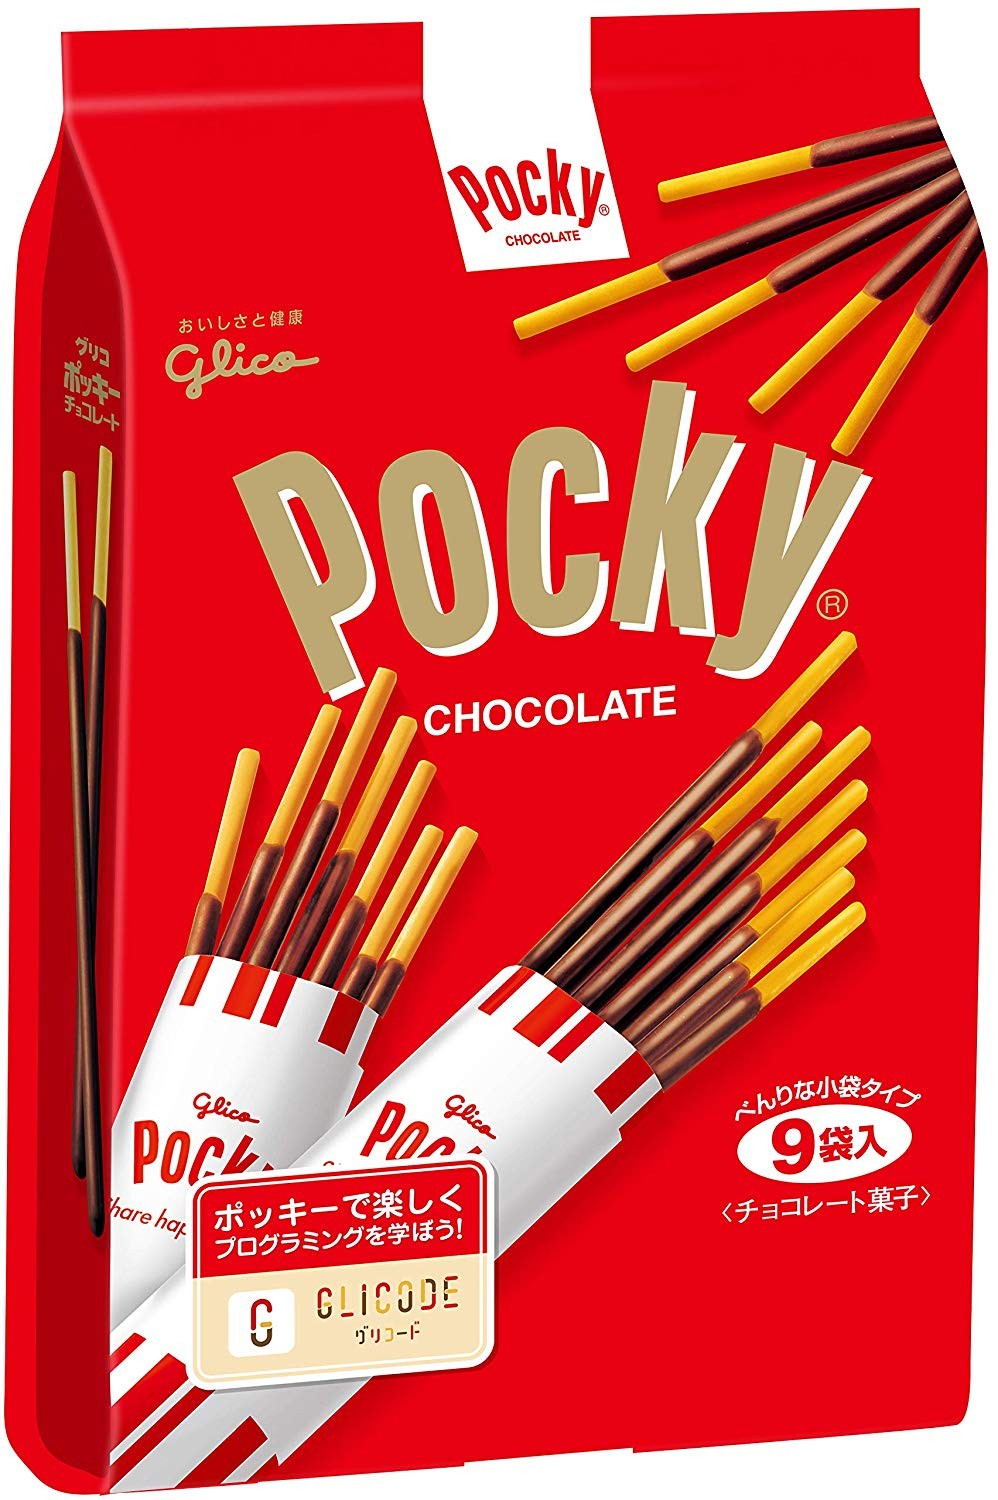 glico-pocky-biscuit-sticks-chocolate-flavor